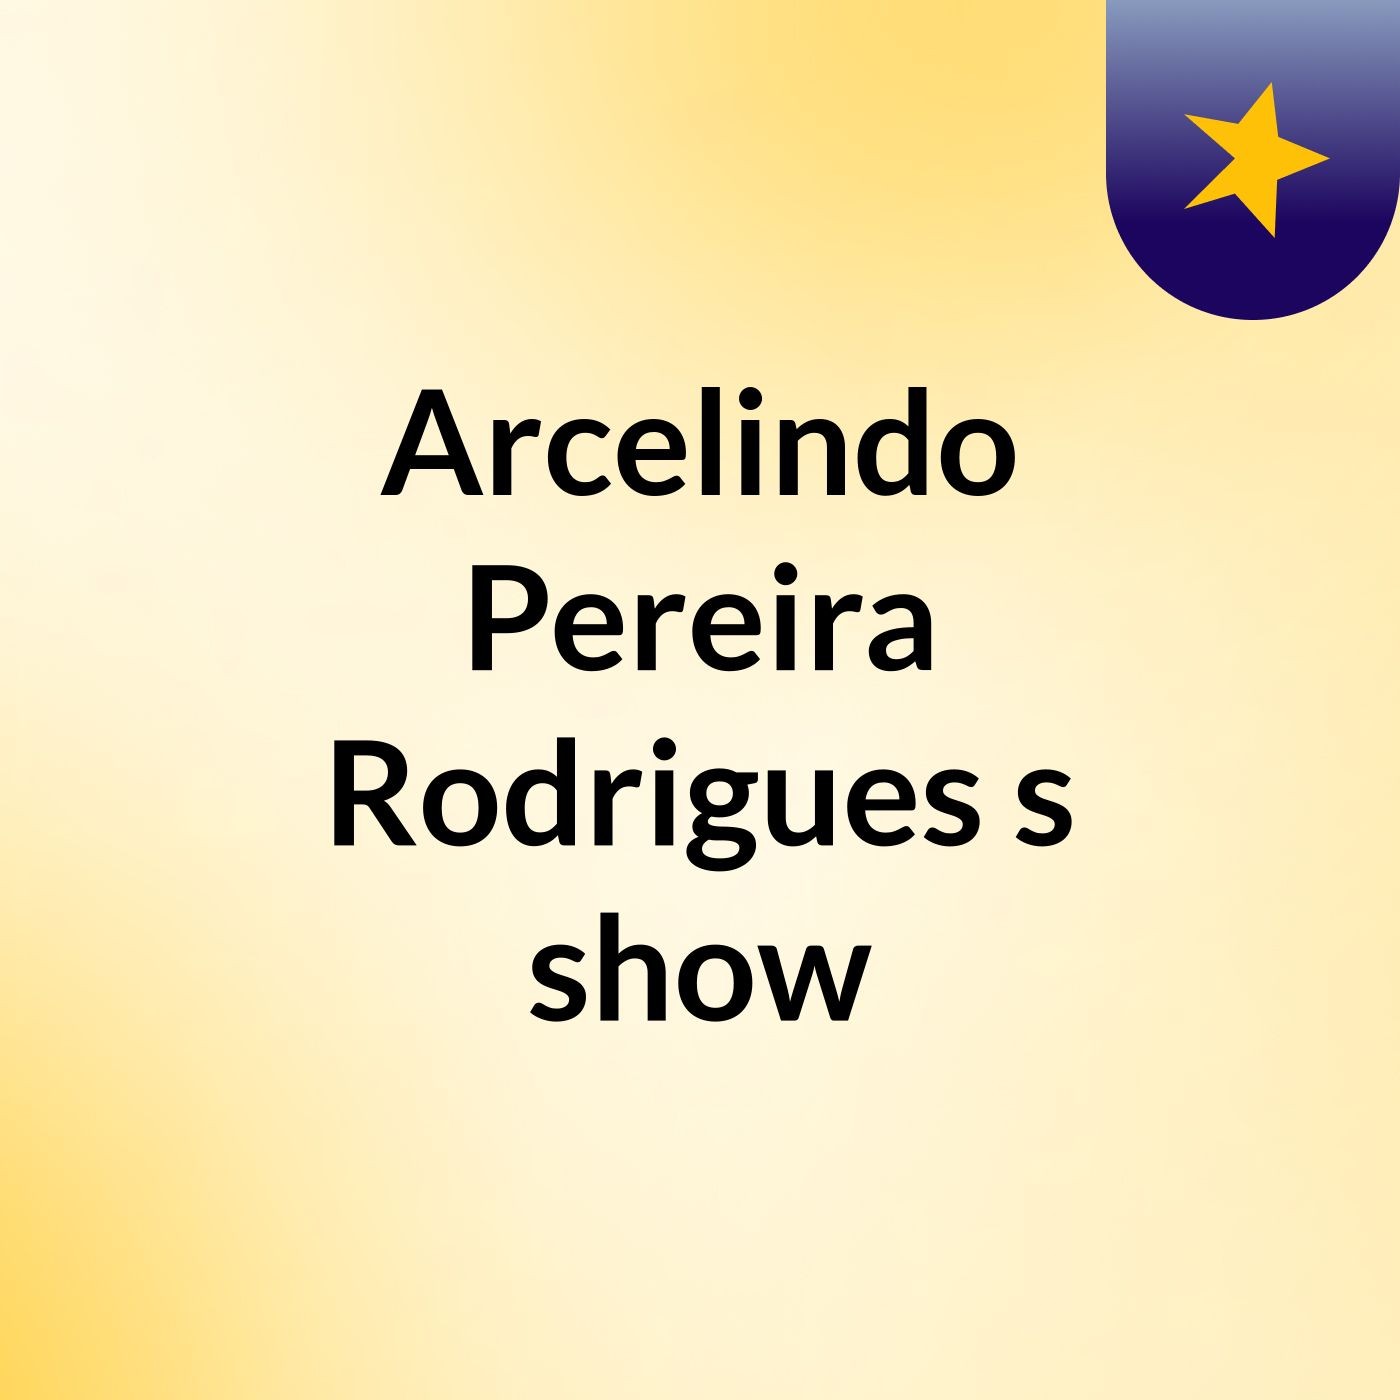 Arcelindo Pereira Rodrigues's show